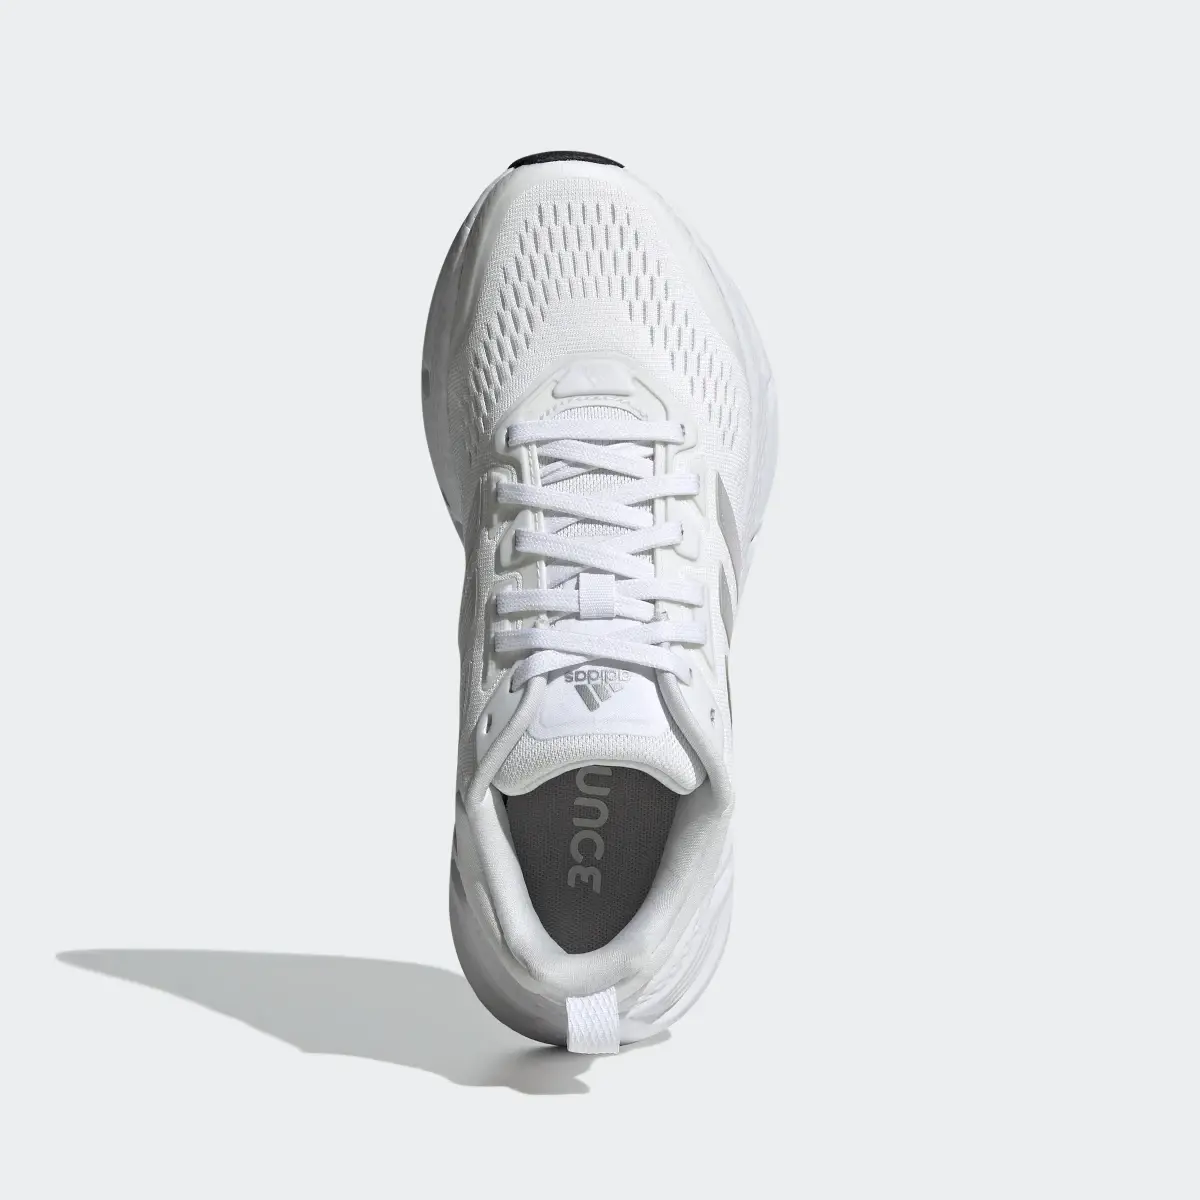 Adidas Questar Schuh. 3